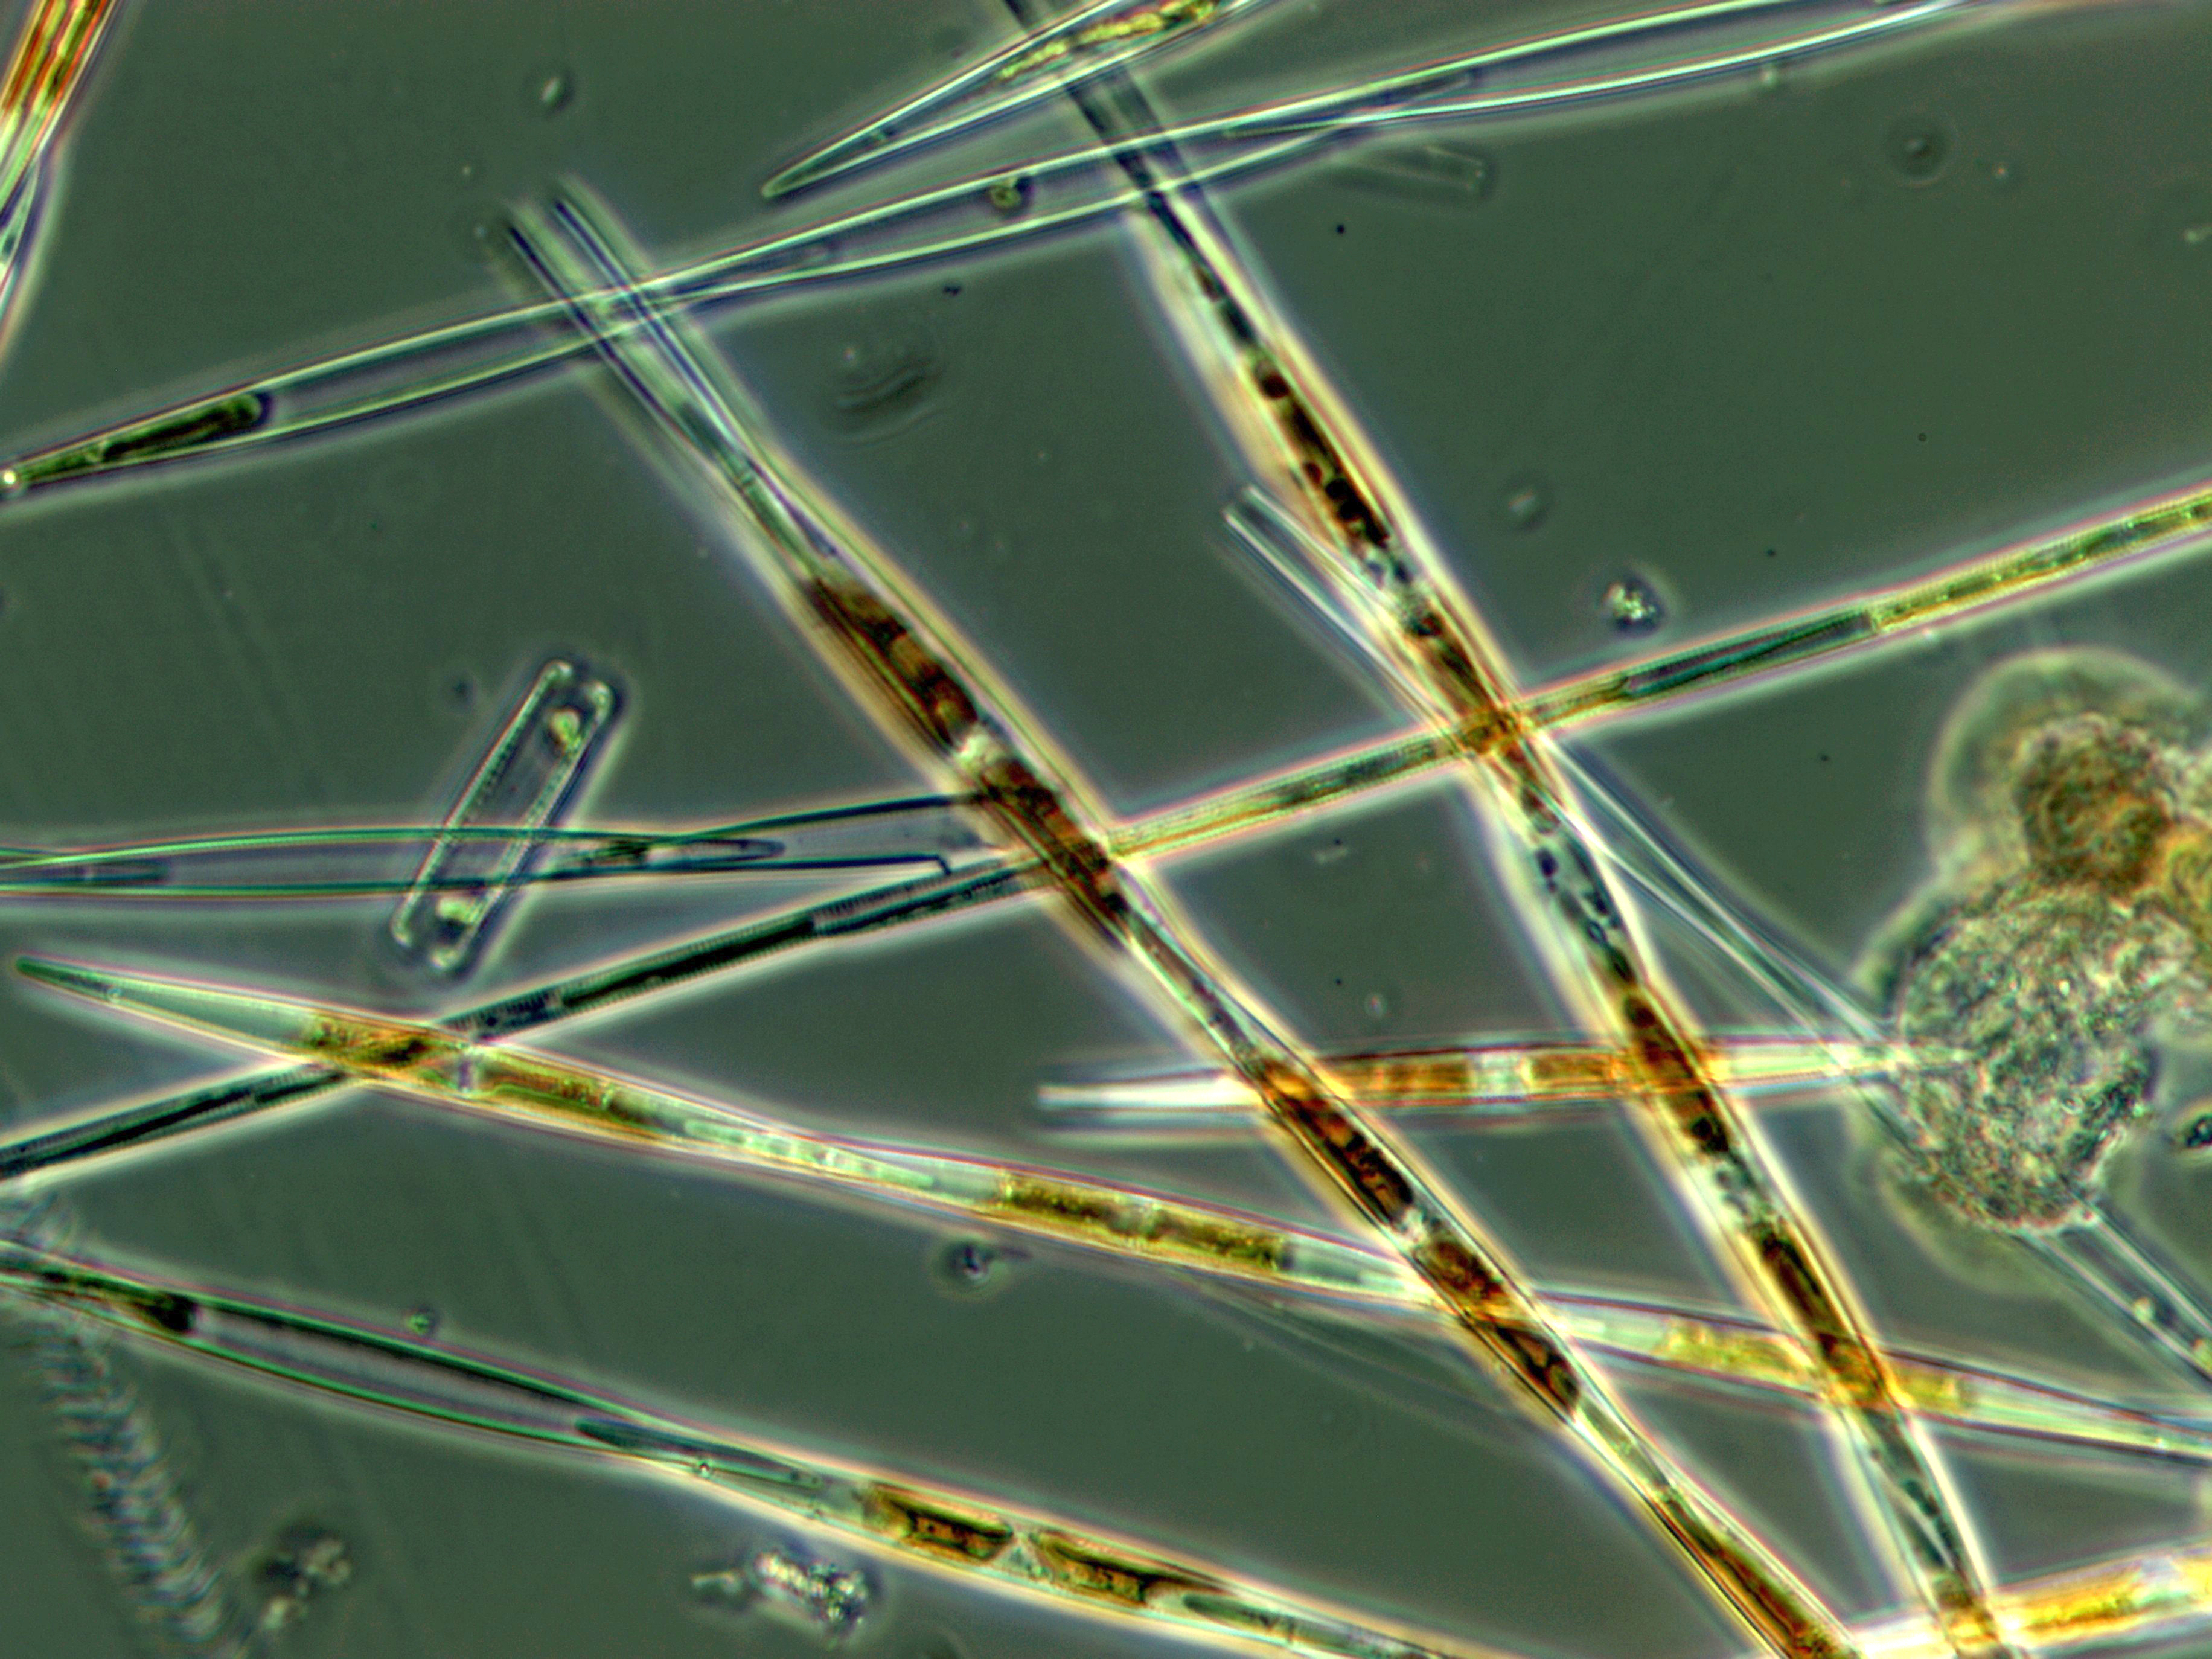 A close-up of Pseudo-nitzchia, a common a common type of phytoplankton